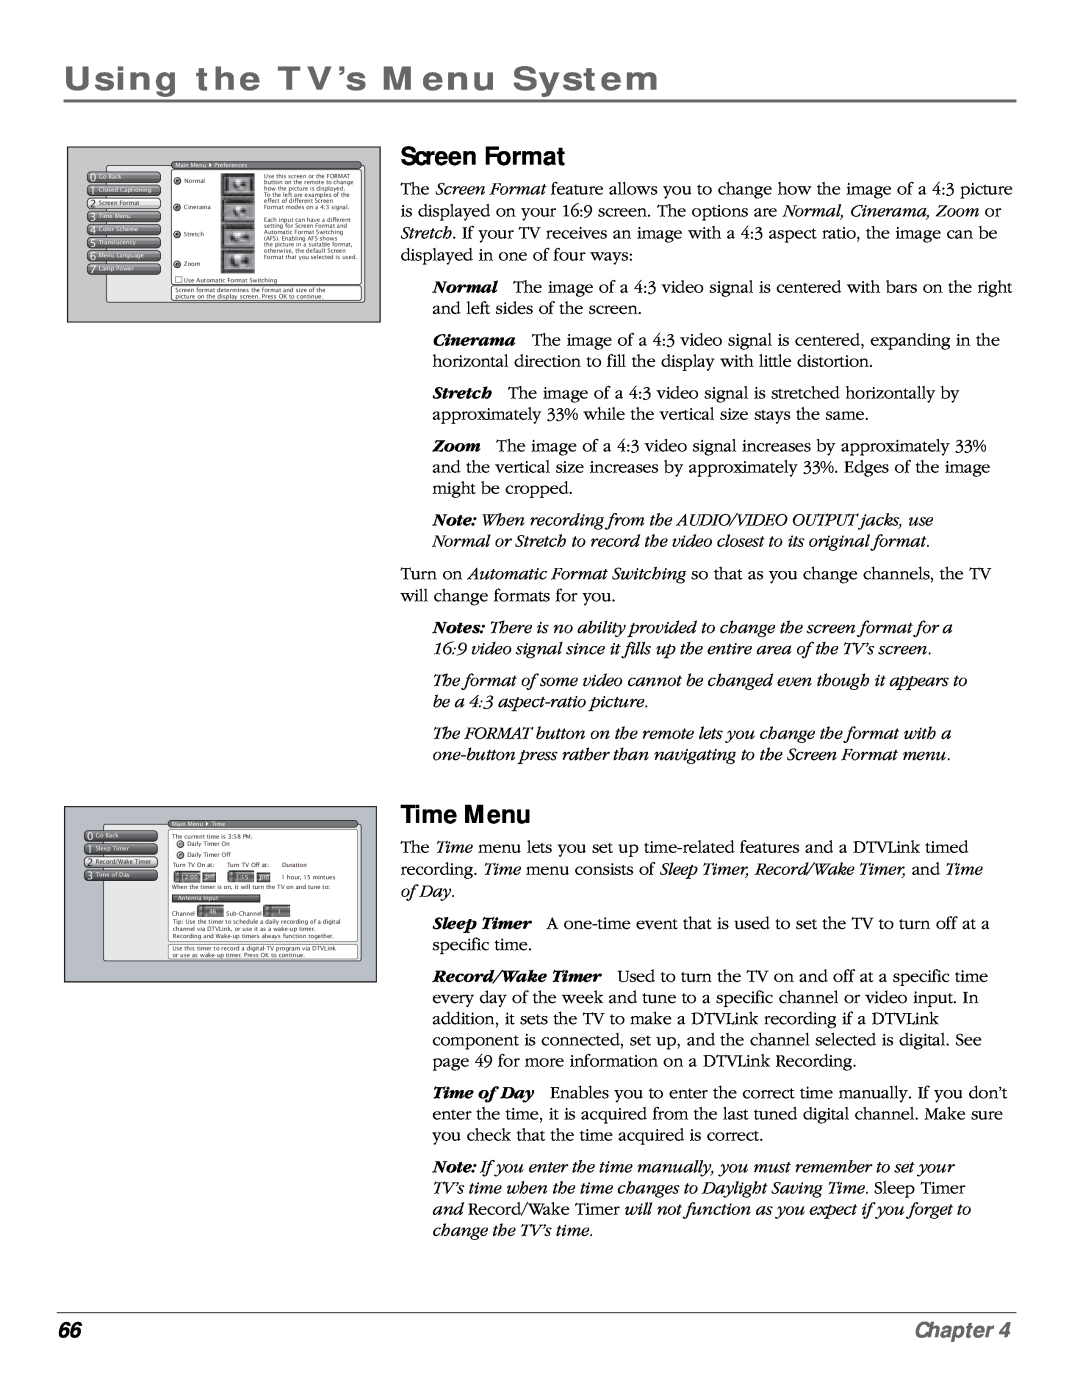 RCA scenium manual Screen Format, Time Menu, Using the TV’s Menu System, Chapter 